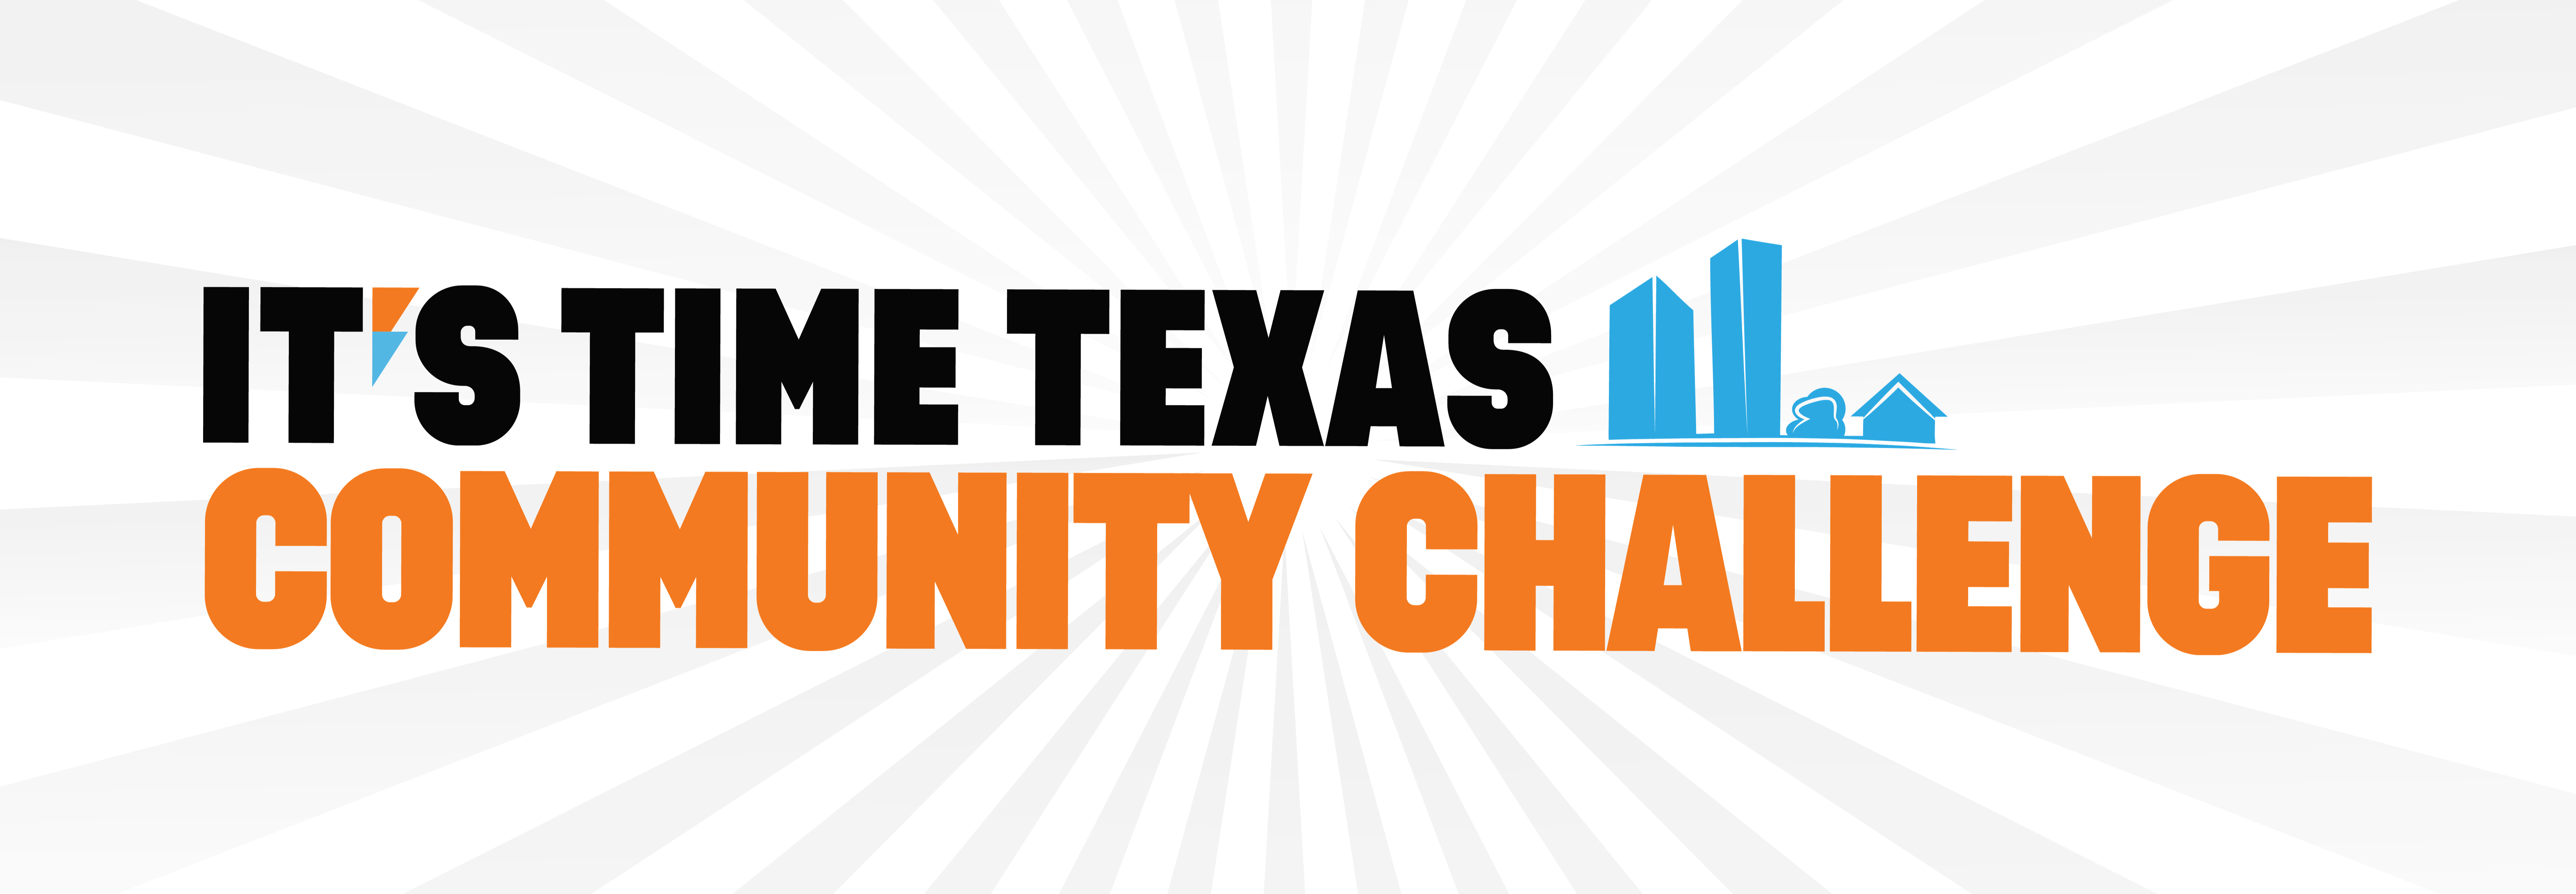 it's time texas community challenge